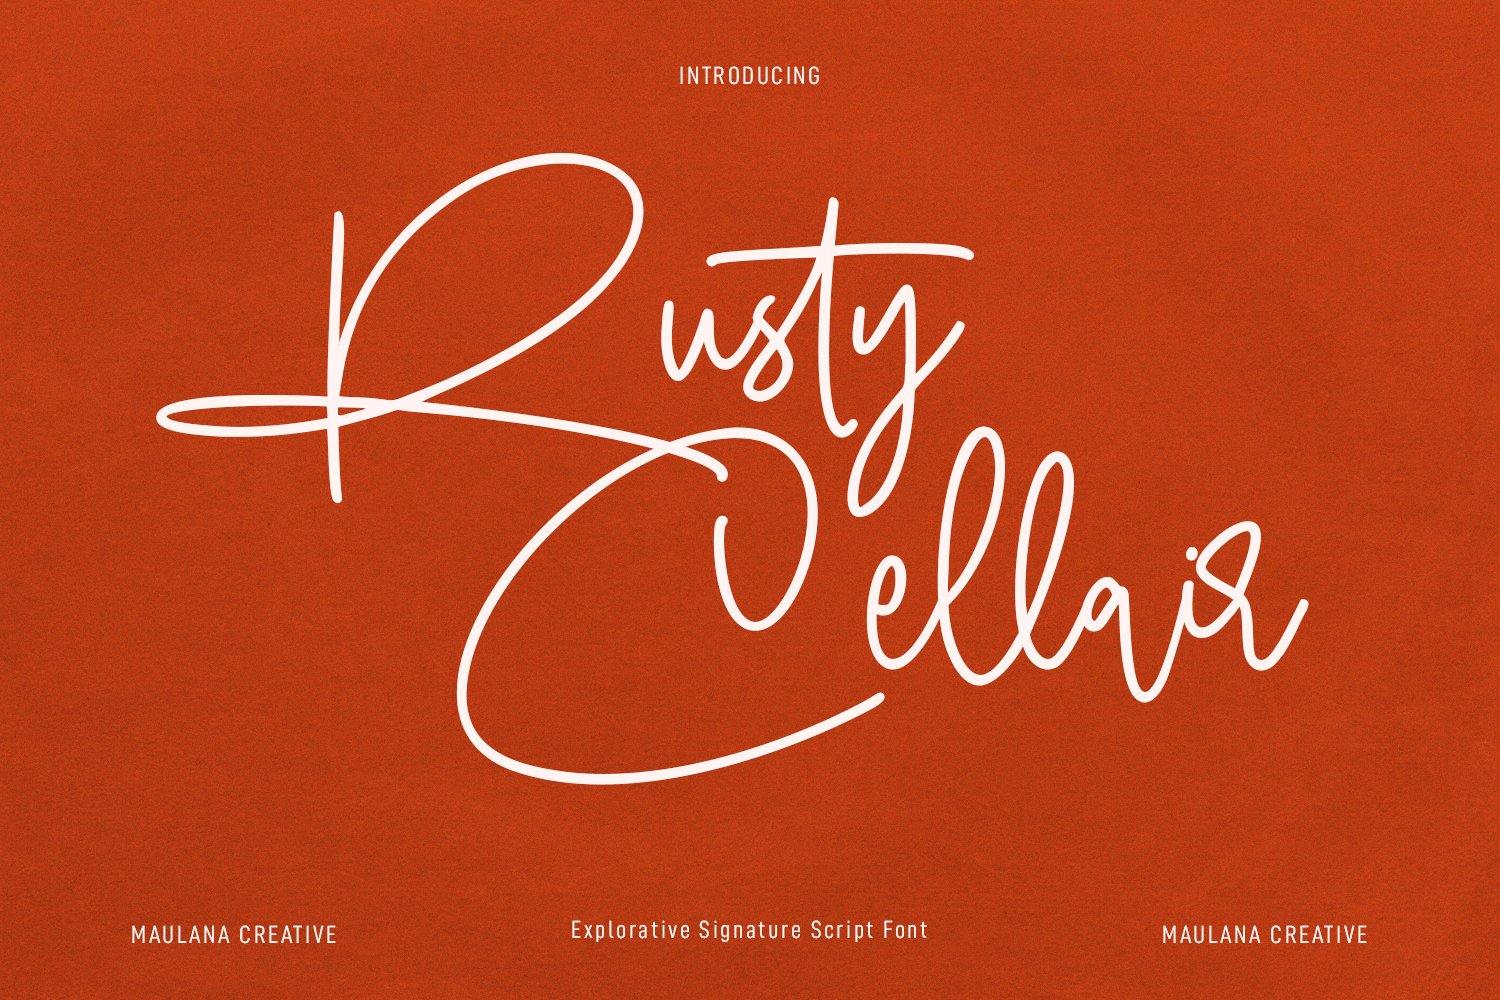 Rusty Cellair Signature Script Font cover image.